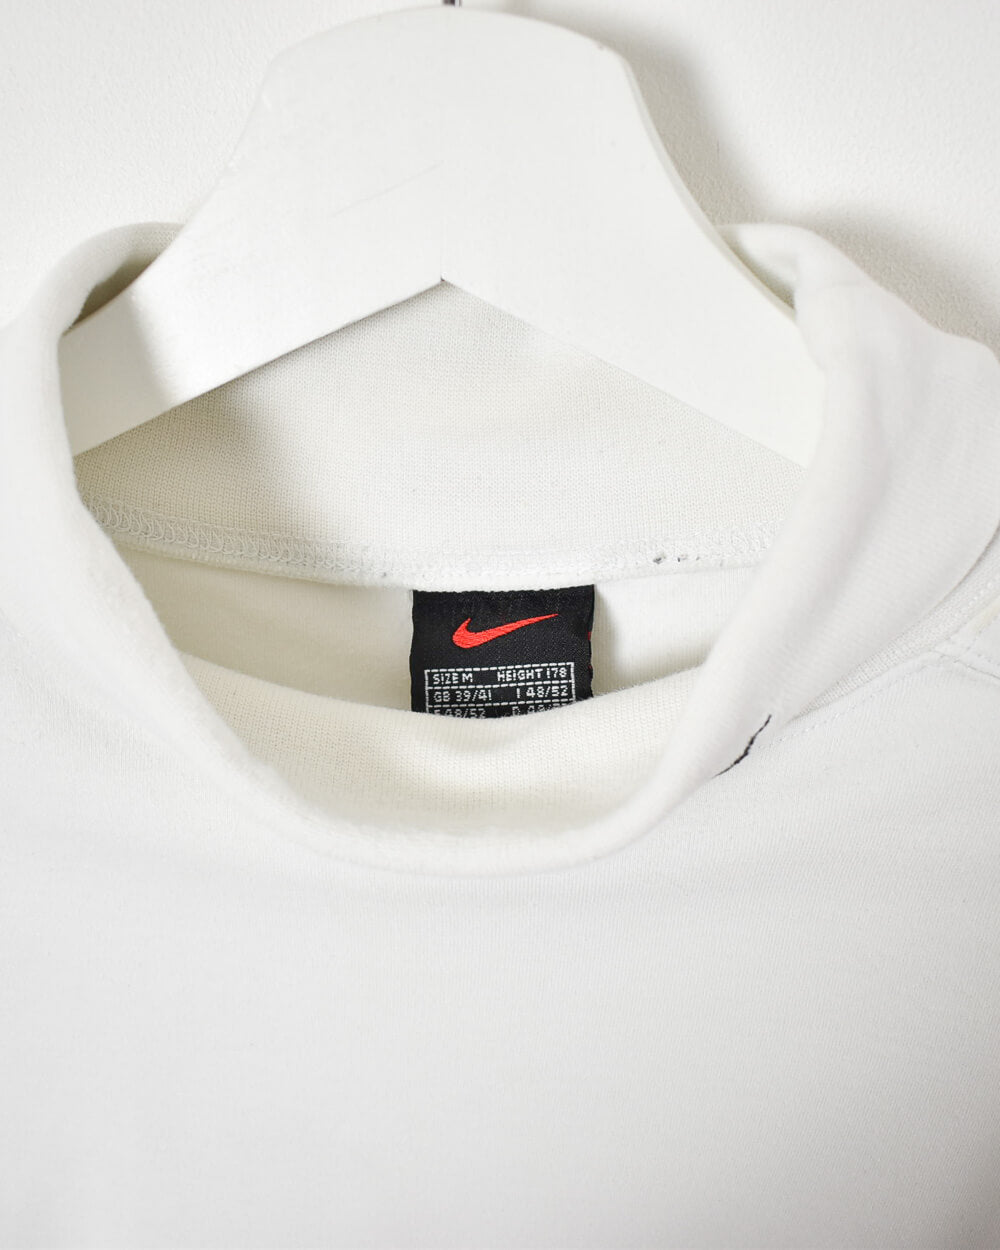 White Nike Turtle Neck Sweatshirt - Medium